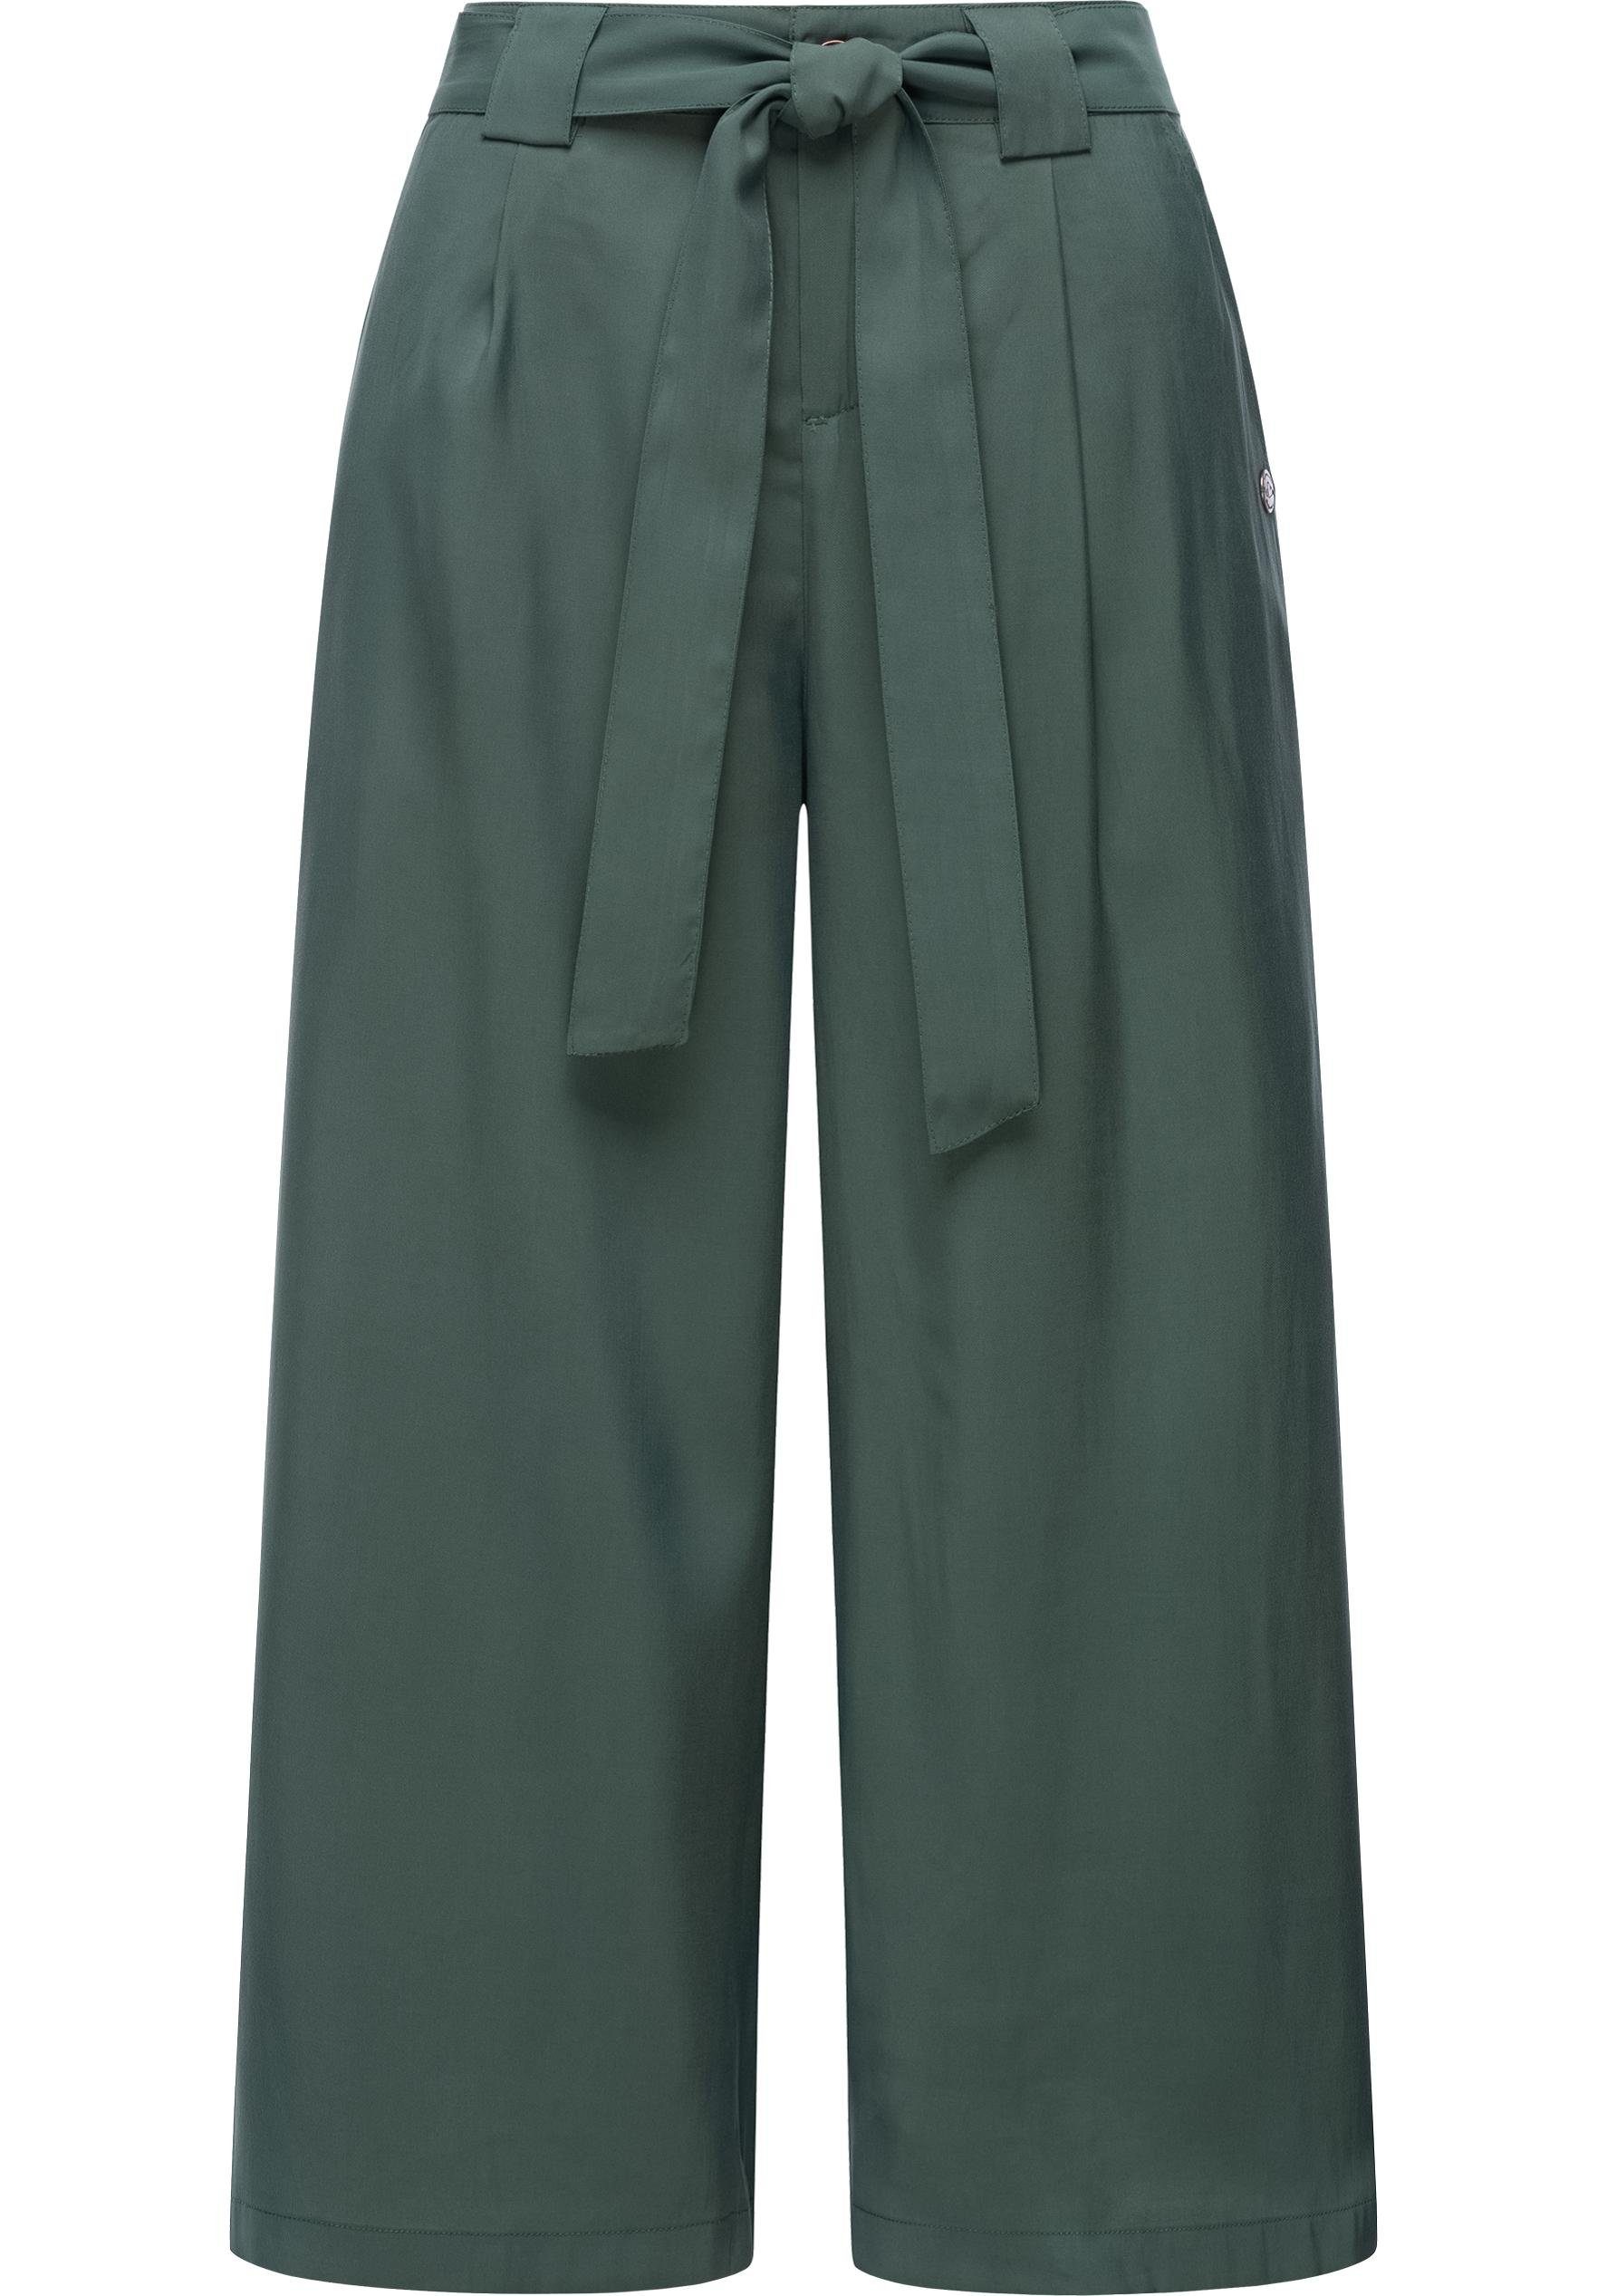 Ragwear Stoffhose Yarai Stylische Culotte Hose mit Gürtel dunkelgrün